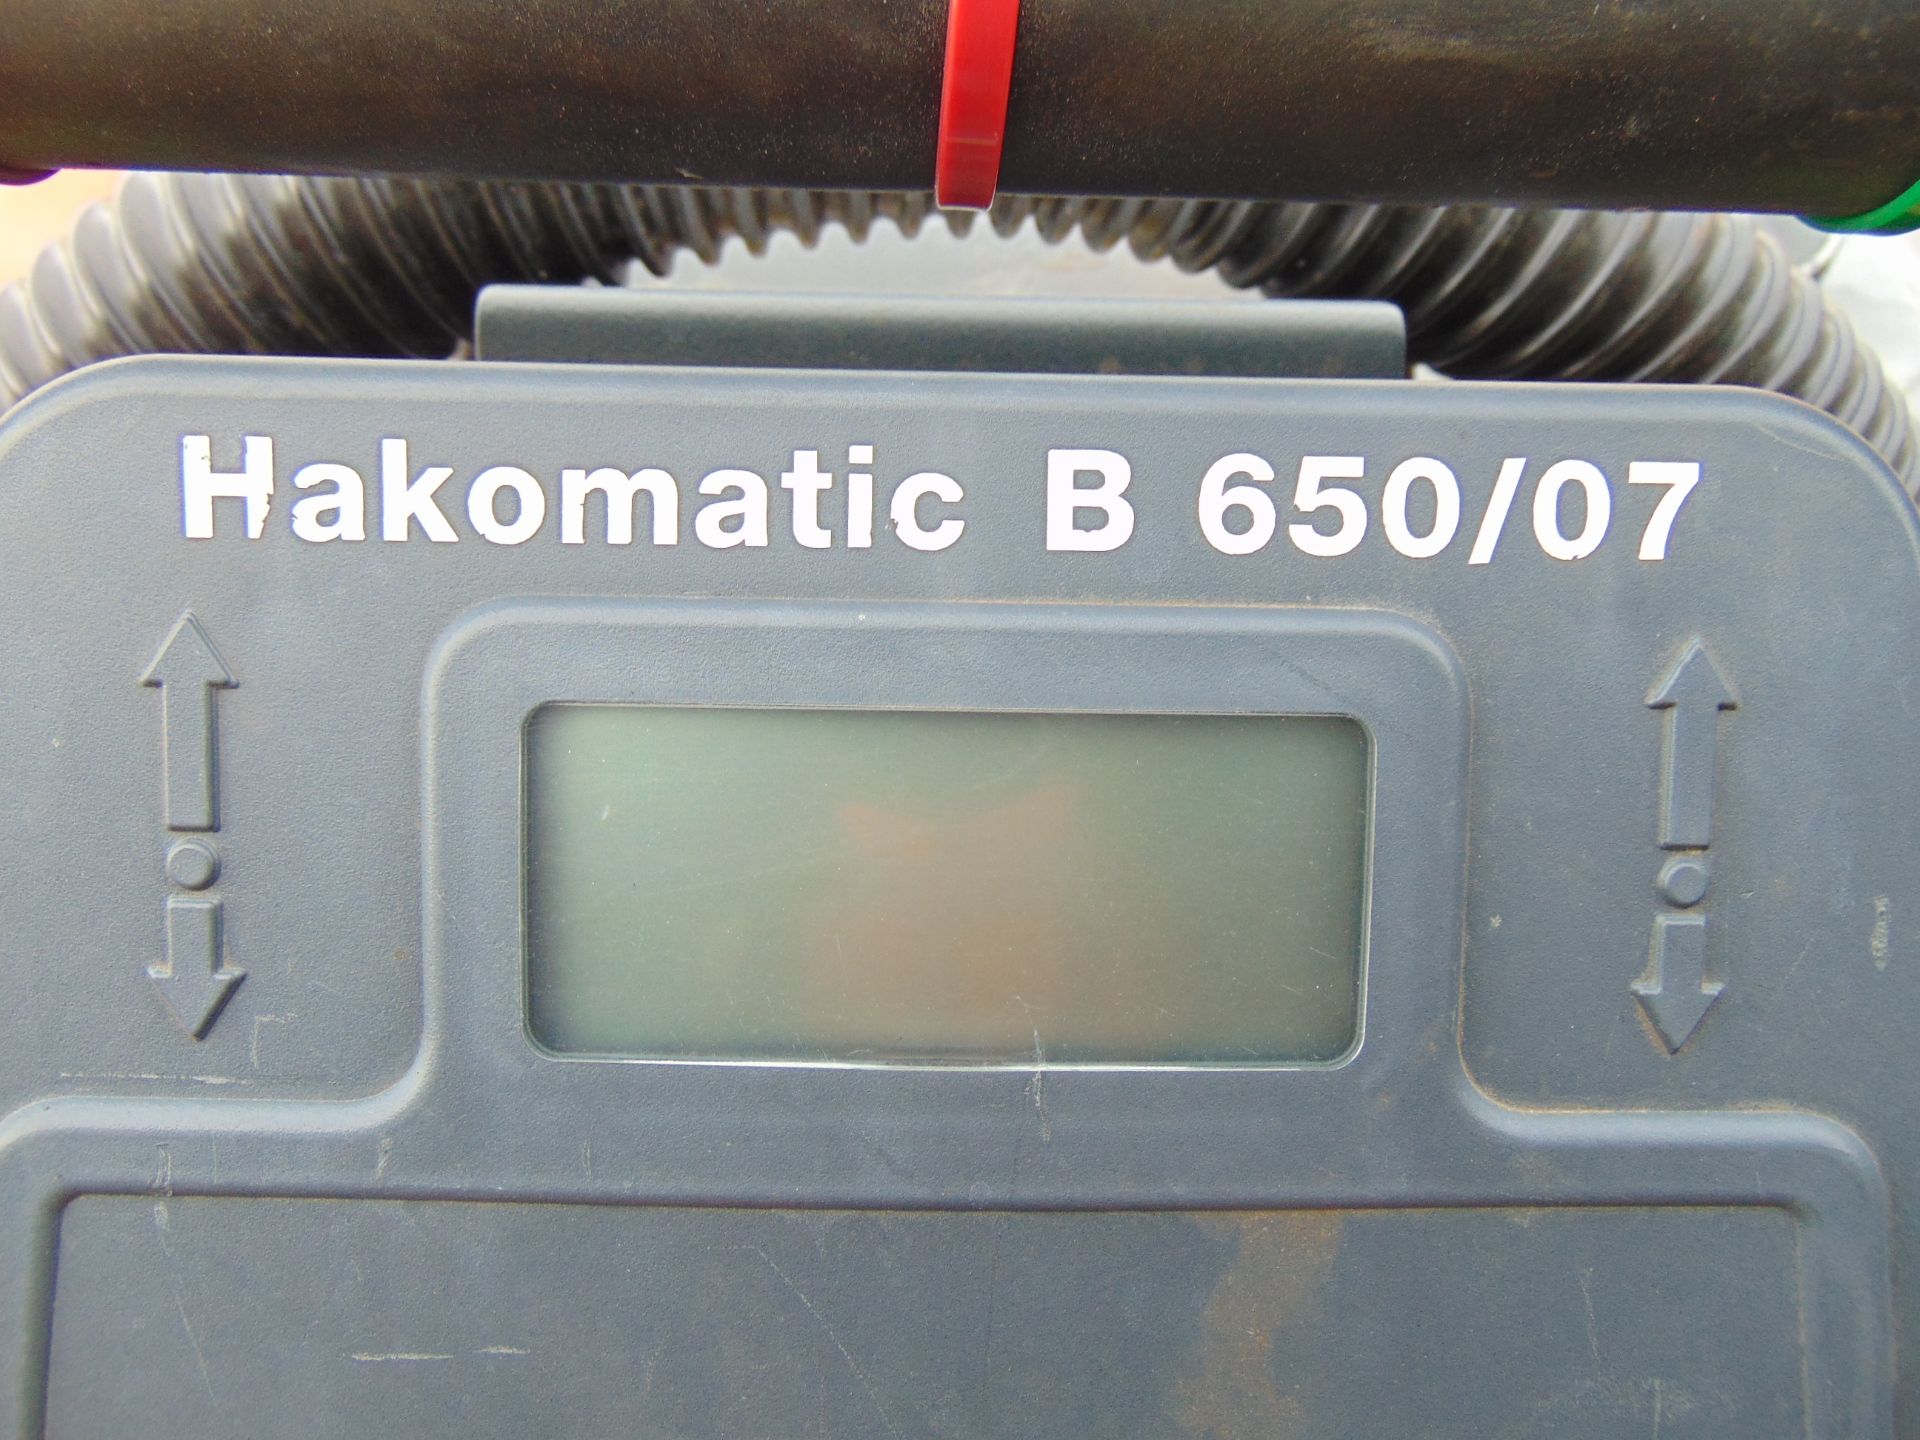 Hakomatic B650/07 Floor Cleaner - Image 7 of 10